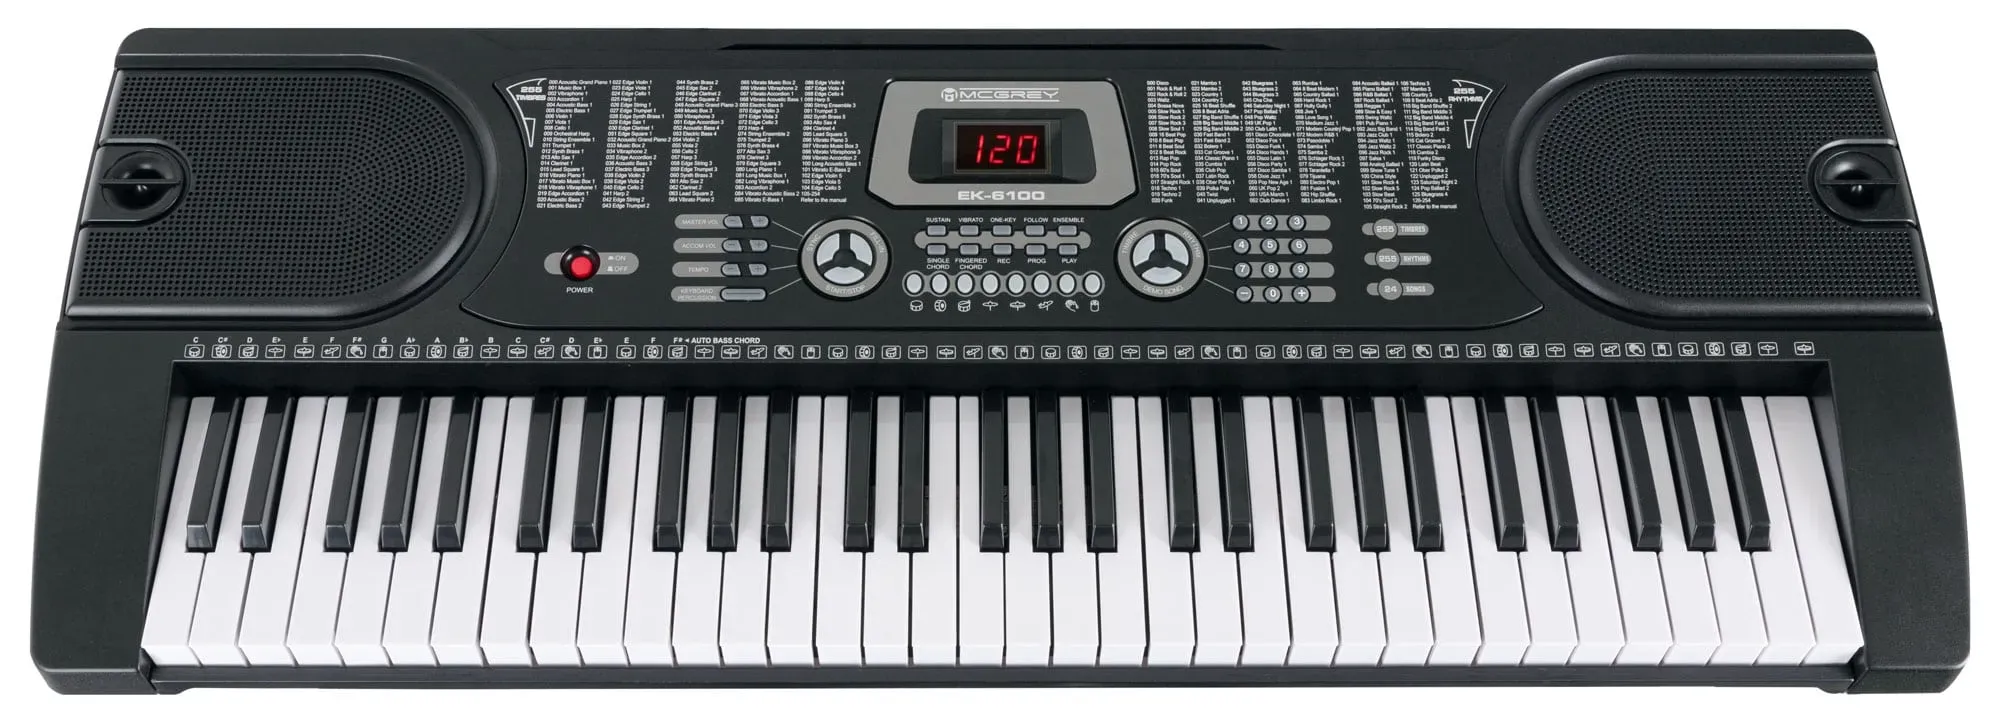 McGrey EK-6100 Keyboard